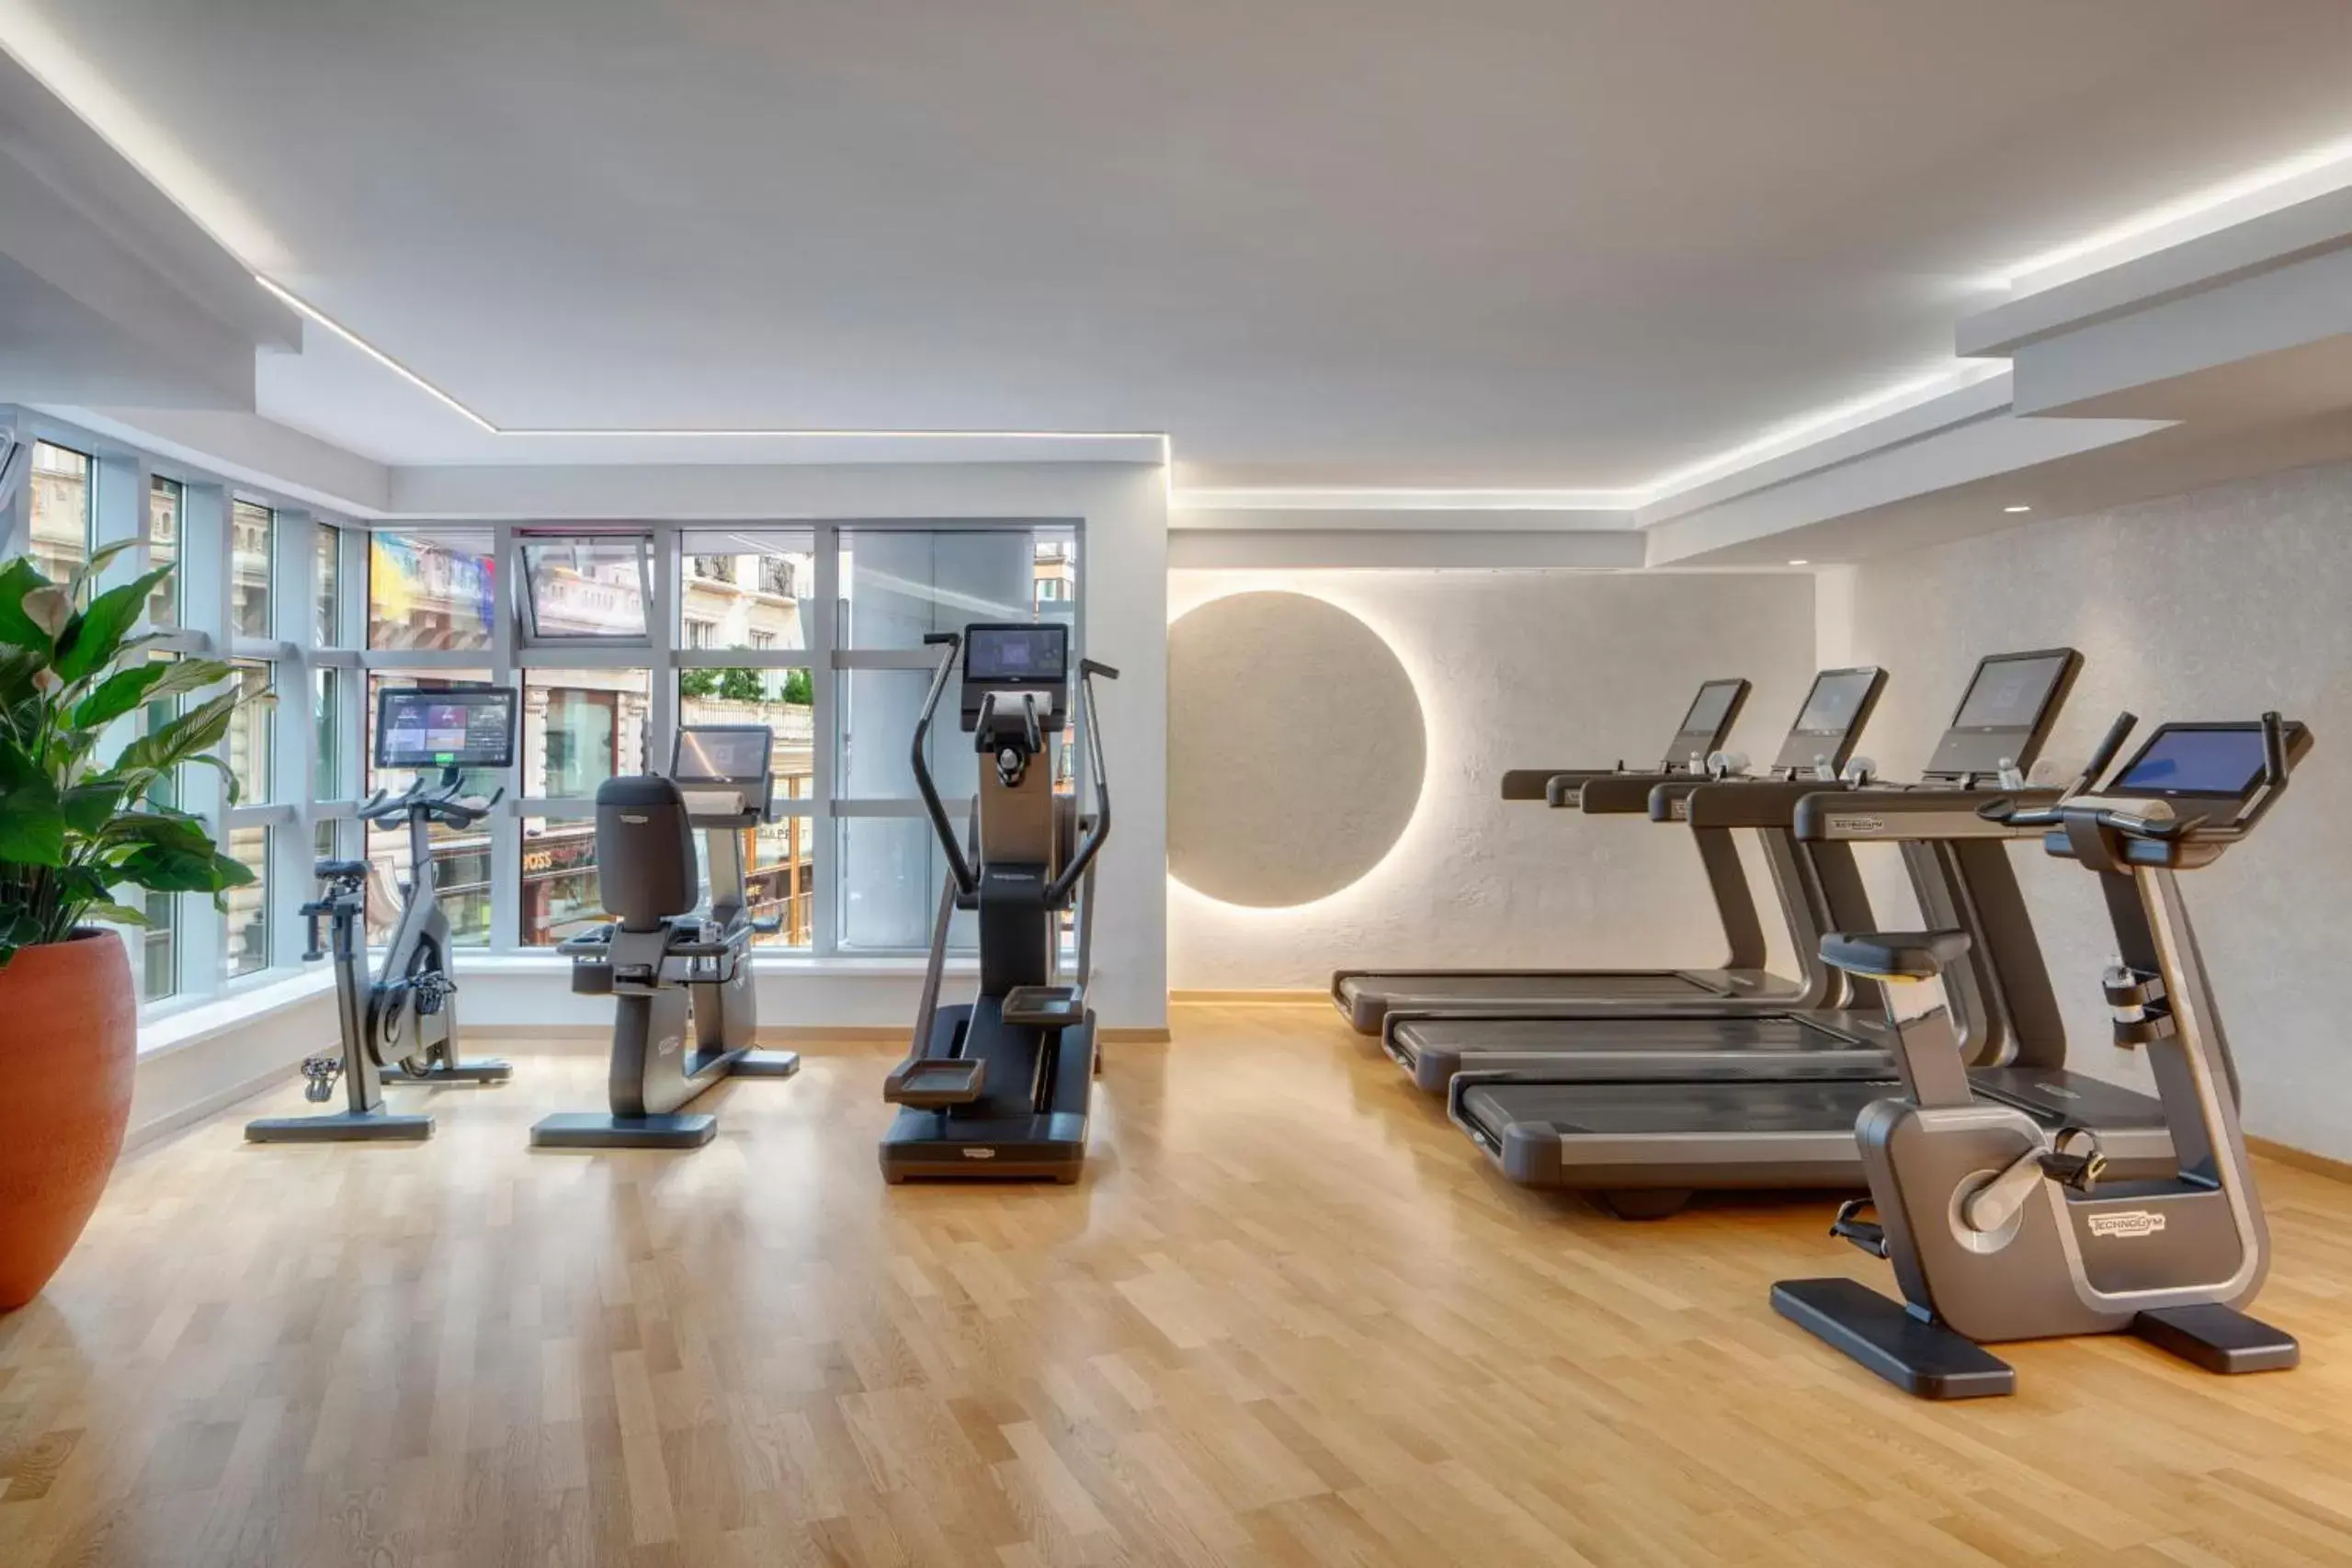 Fitness centre/facilities, Fitness Center/Facilities in Kempinski Hotel Corvinus Budapest